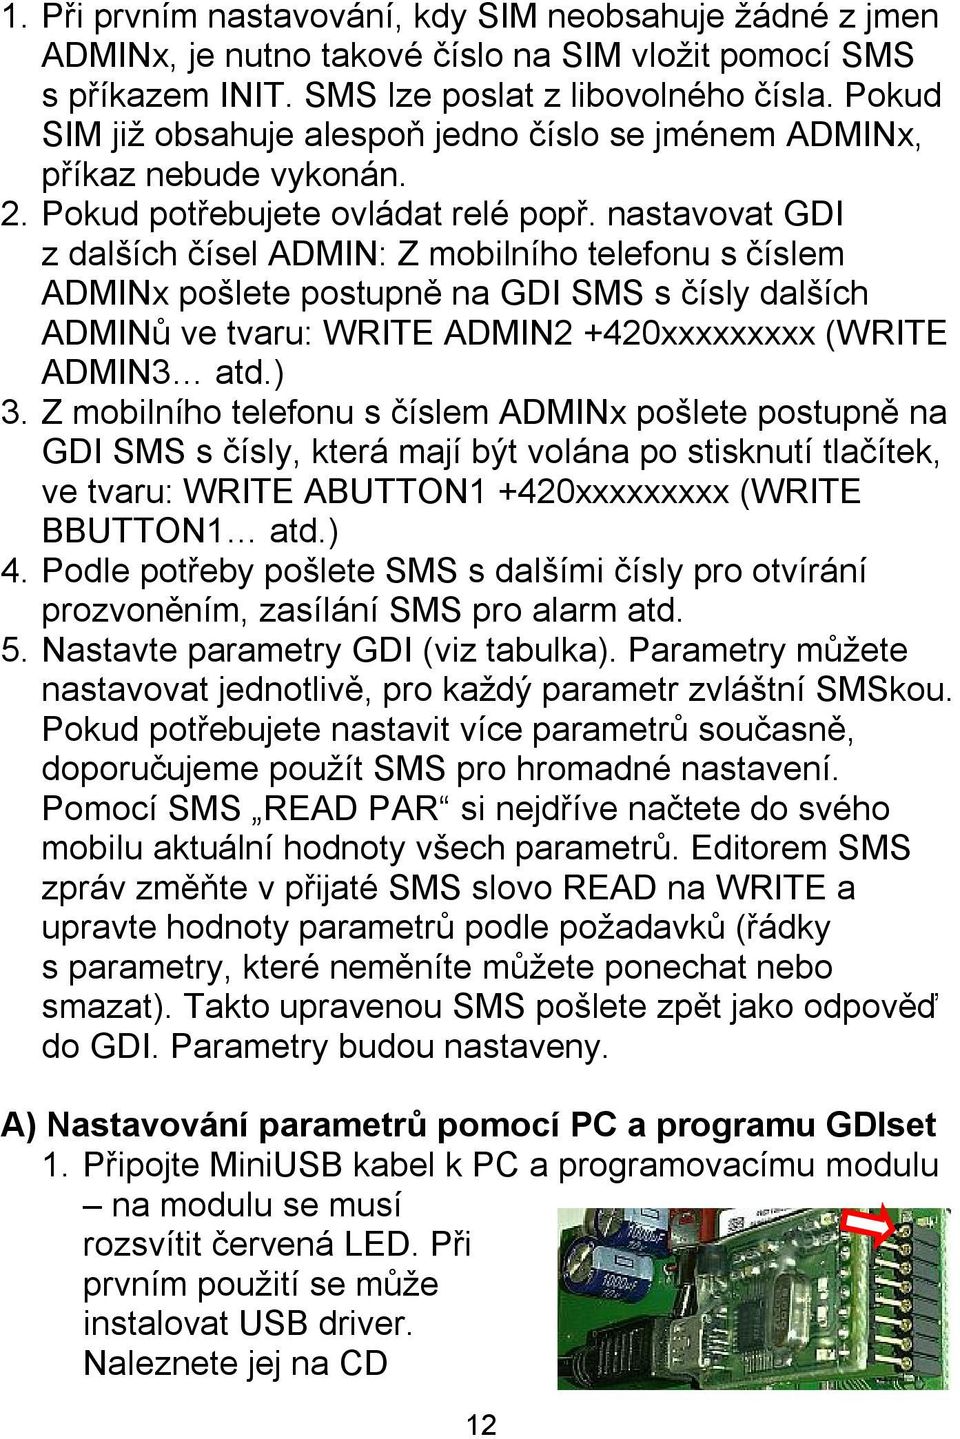 nastavovat GDI z dalších čísel ADMIN: Z mobilního telefonu s číslem ADMINx pošlete postupně na GDI SMS s čísly dalších ADMINů ve tvaru: WRITE ADMIN2 +420xxxxxxxxx (WRITE ADMIN3 atd.) 3.